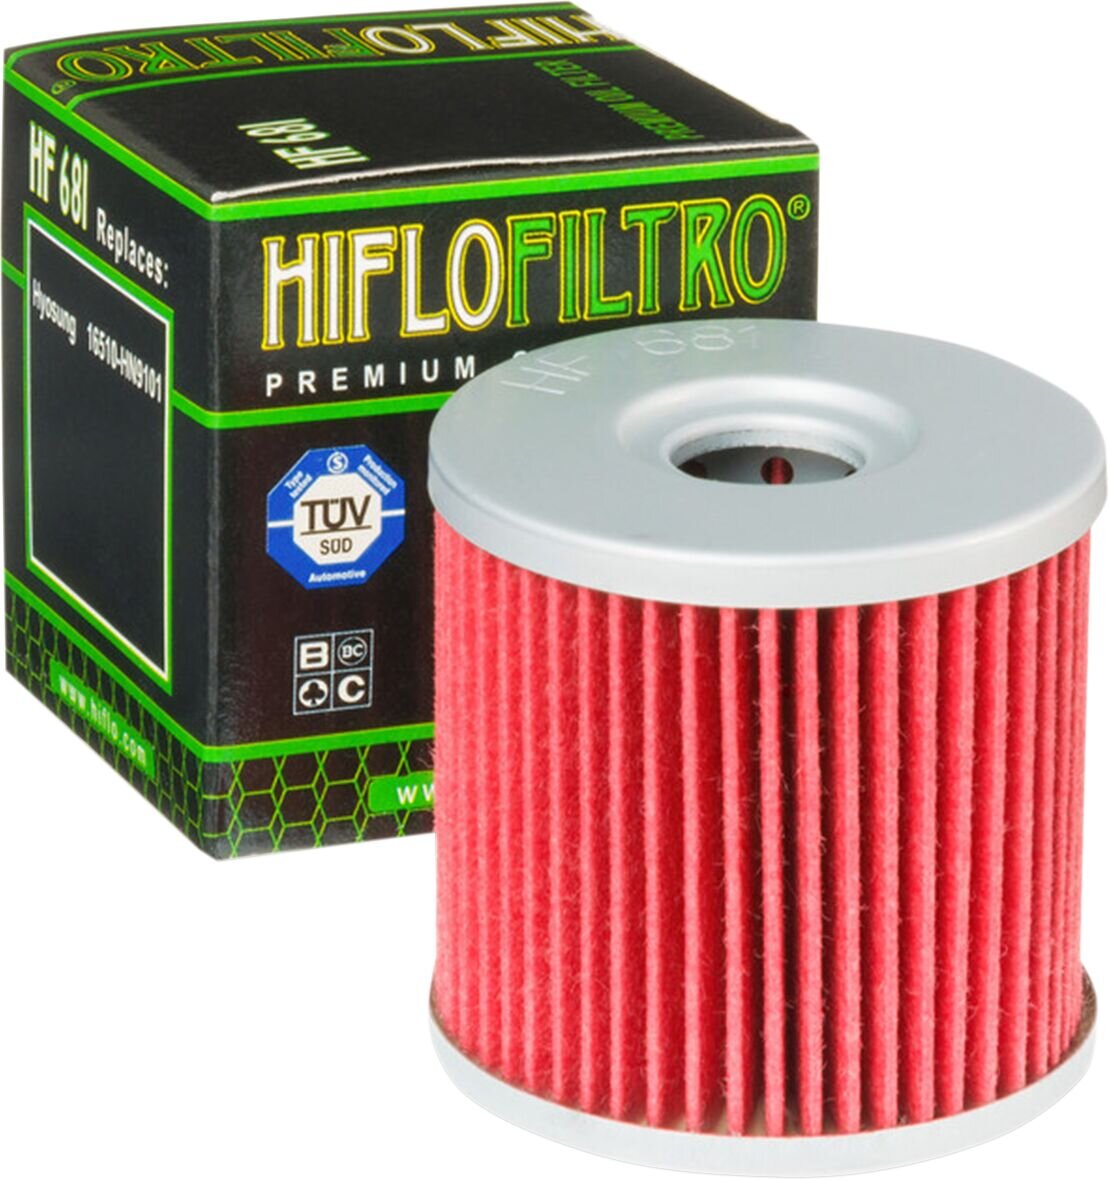 Filter Oil Hyosung Hf681